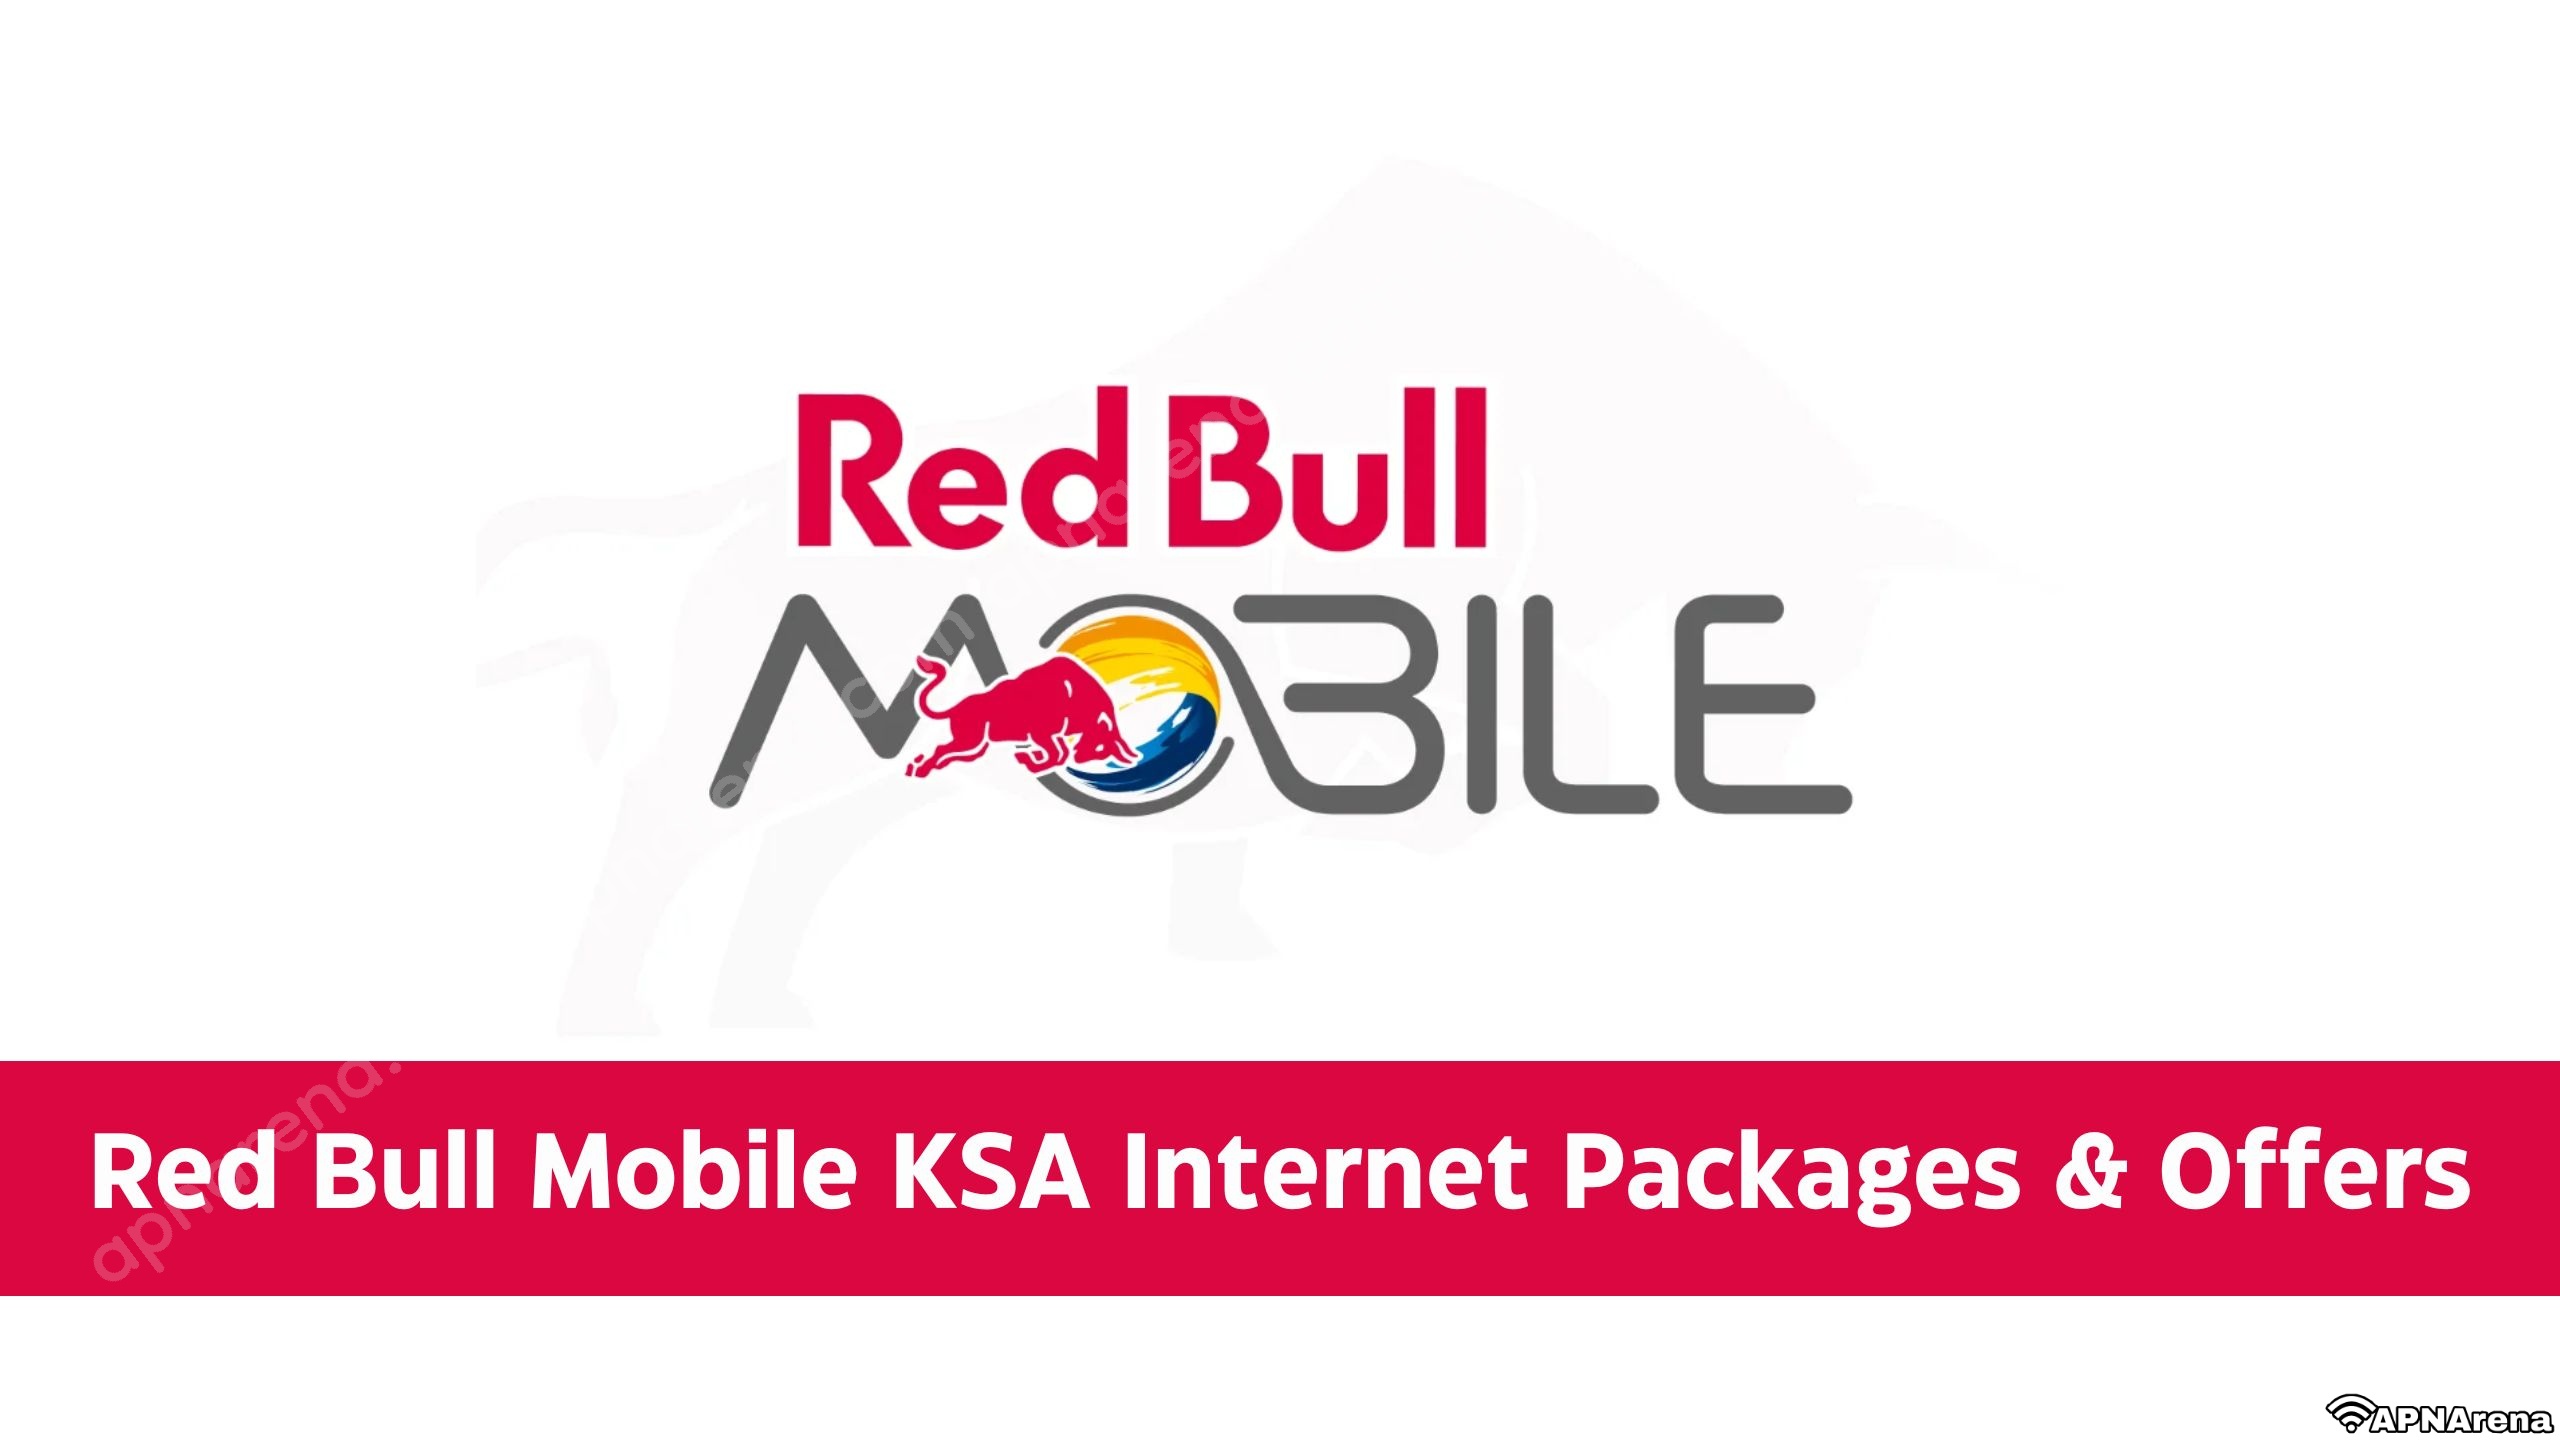 Red Bull Mobile KSA Prepaid, Postpaid Internet Package & Offer, Unlimited Data, Recharge & Net Plan